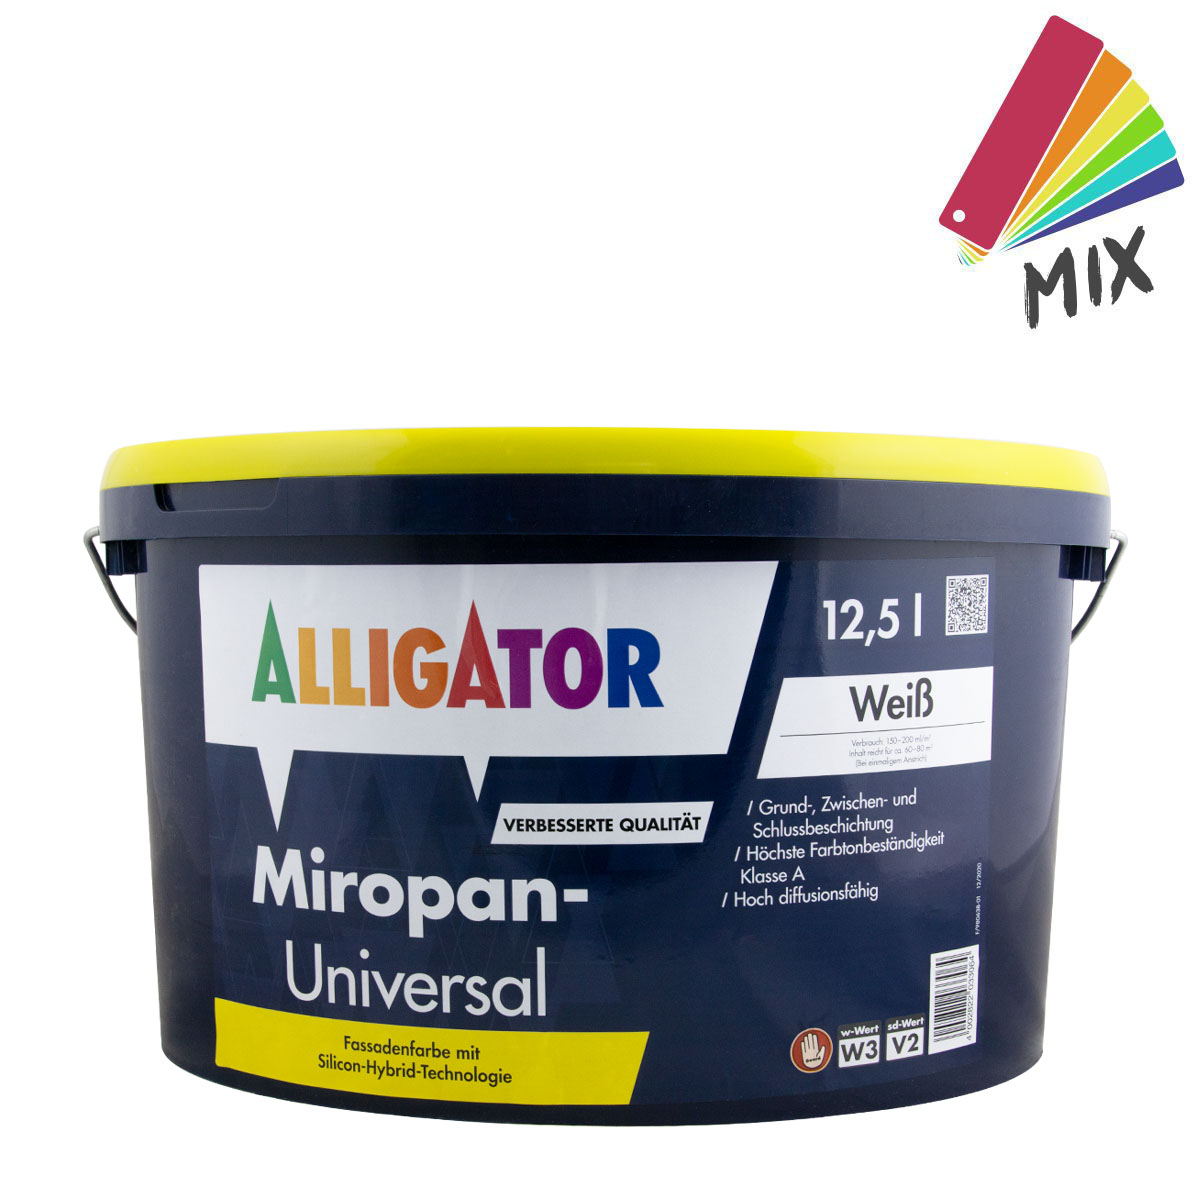 Alligator Miropan Universal 12,5L wunschfarbton PG A, Silicon-Hybrid-Technologie, Fassadenfarbe